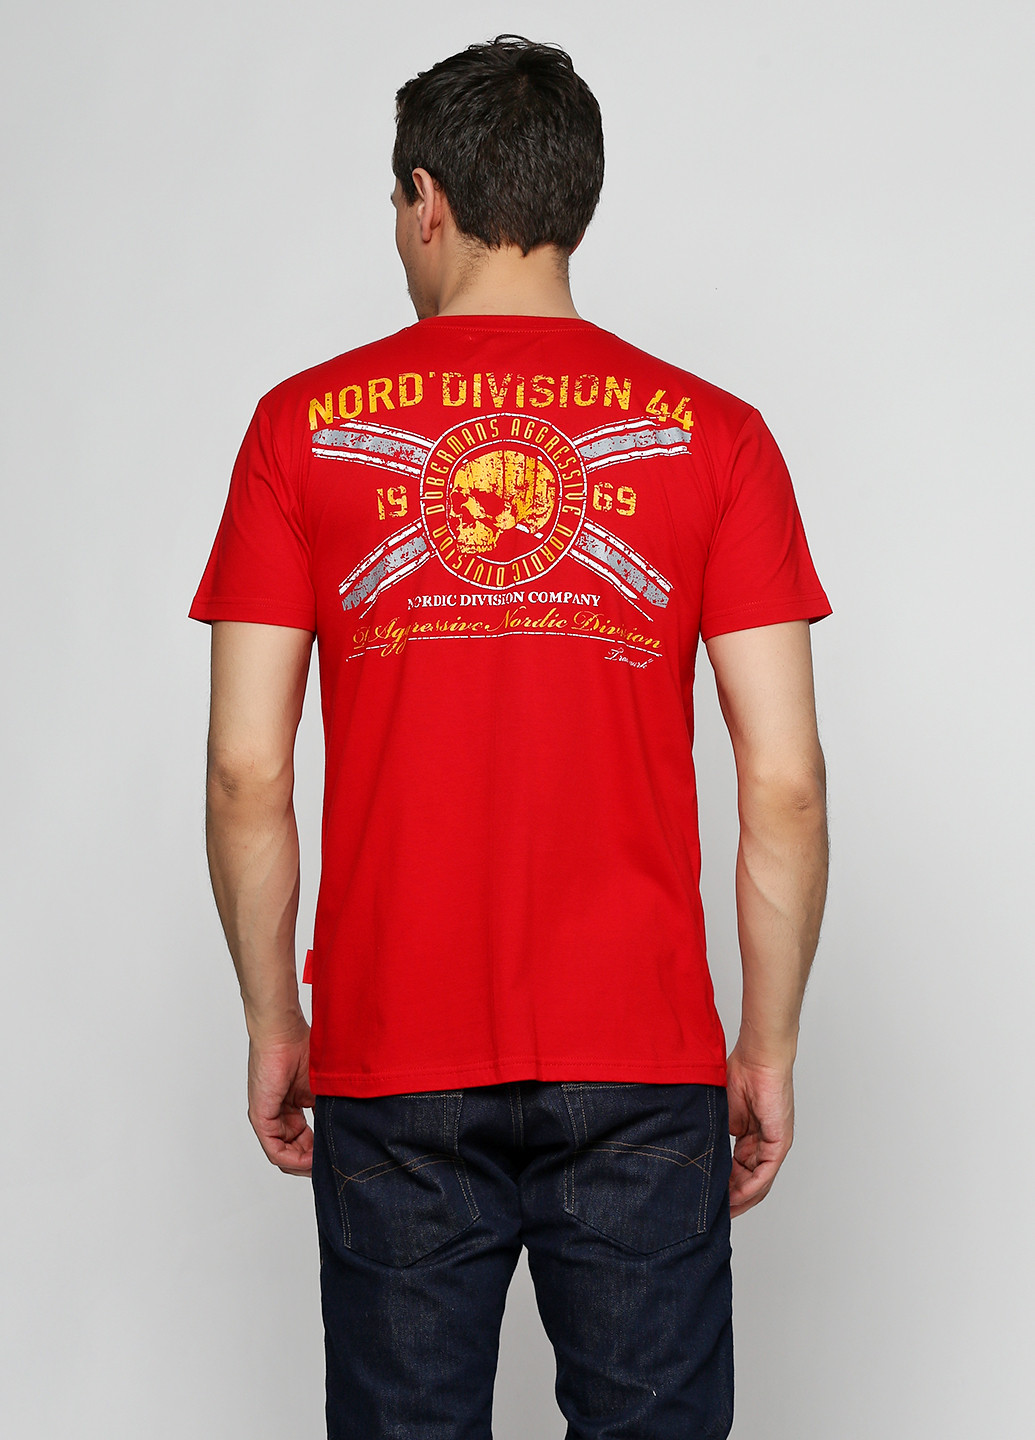 Червона футболка з коротким рукавом Dobermans Aggressive